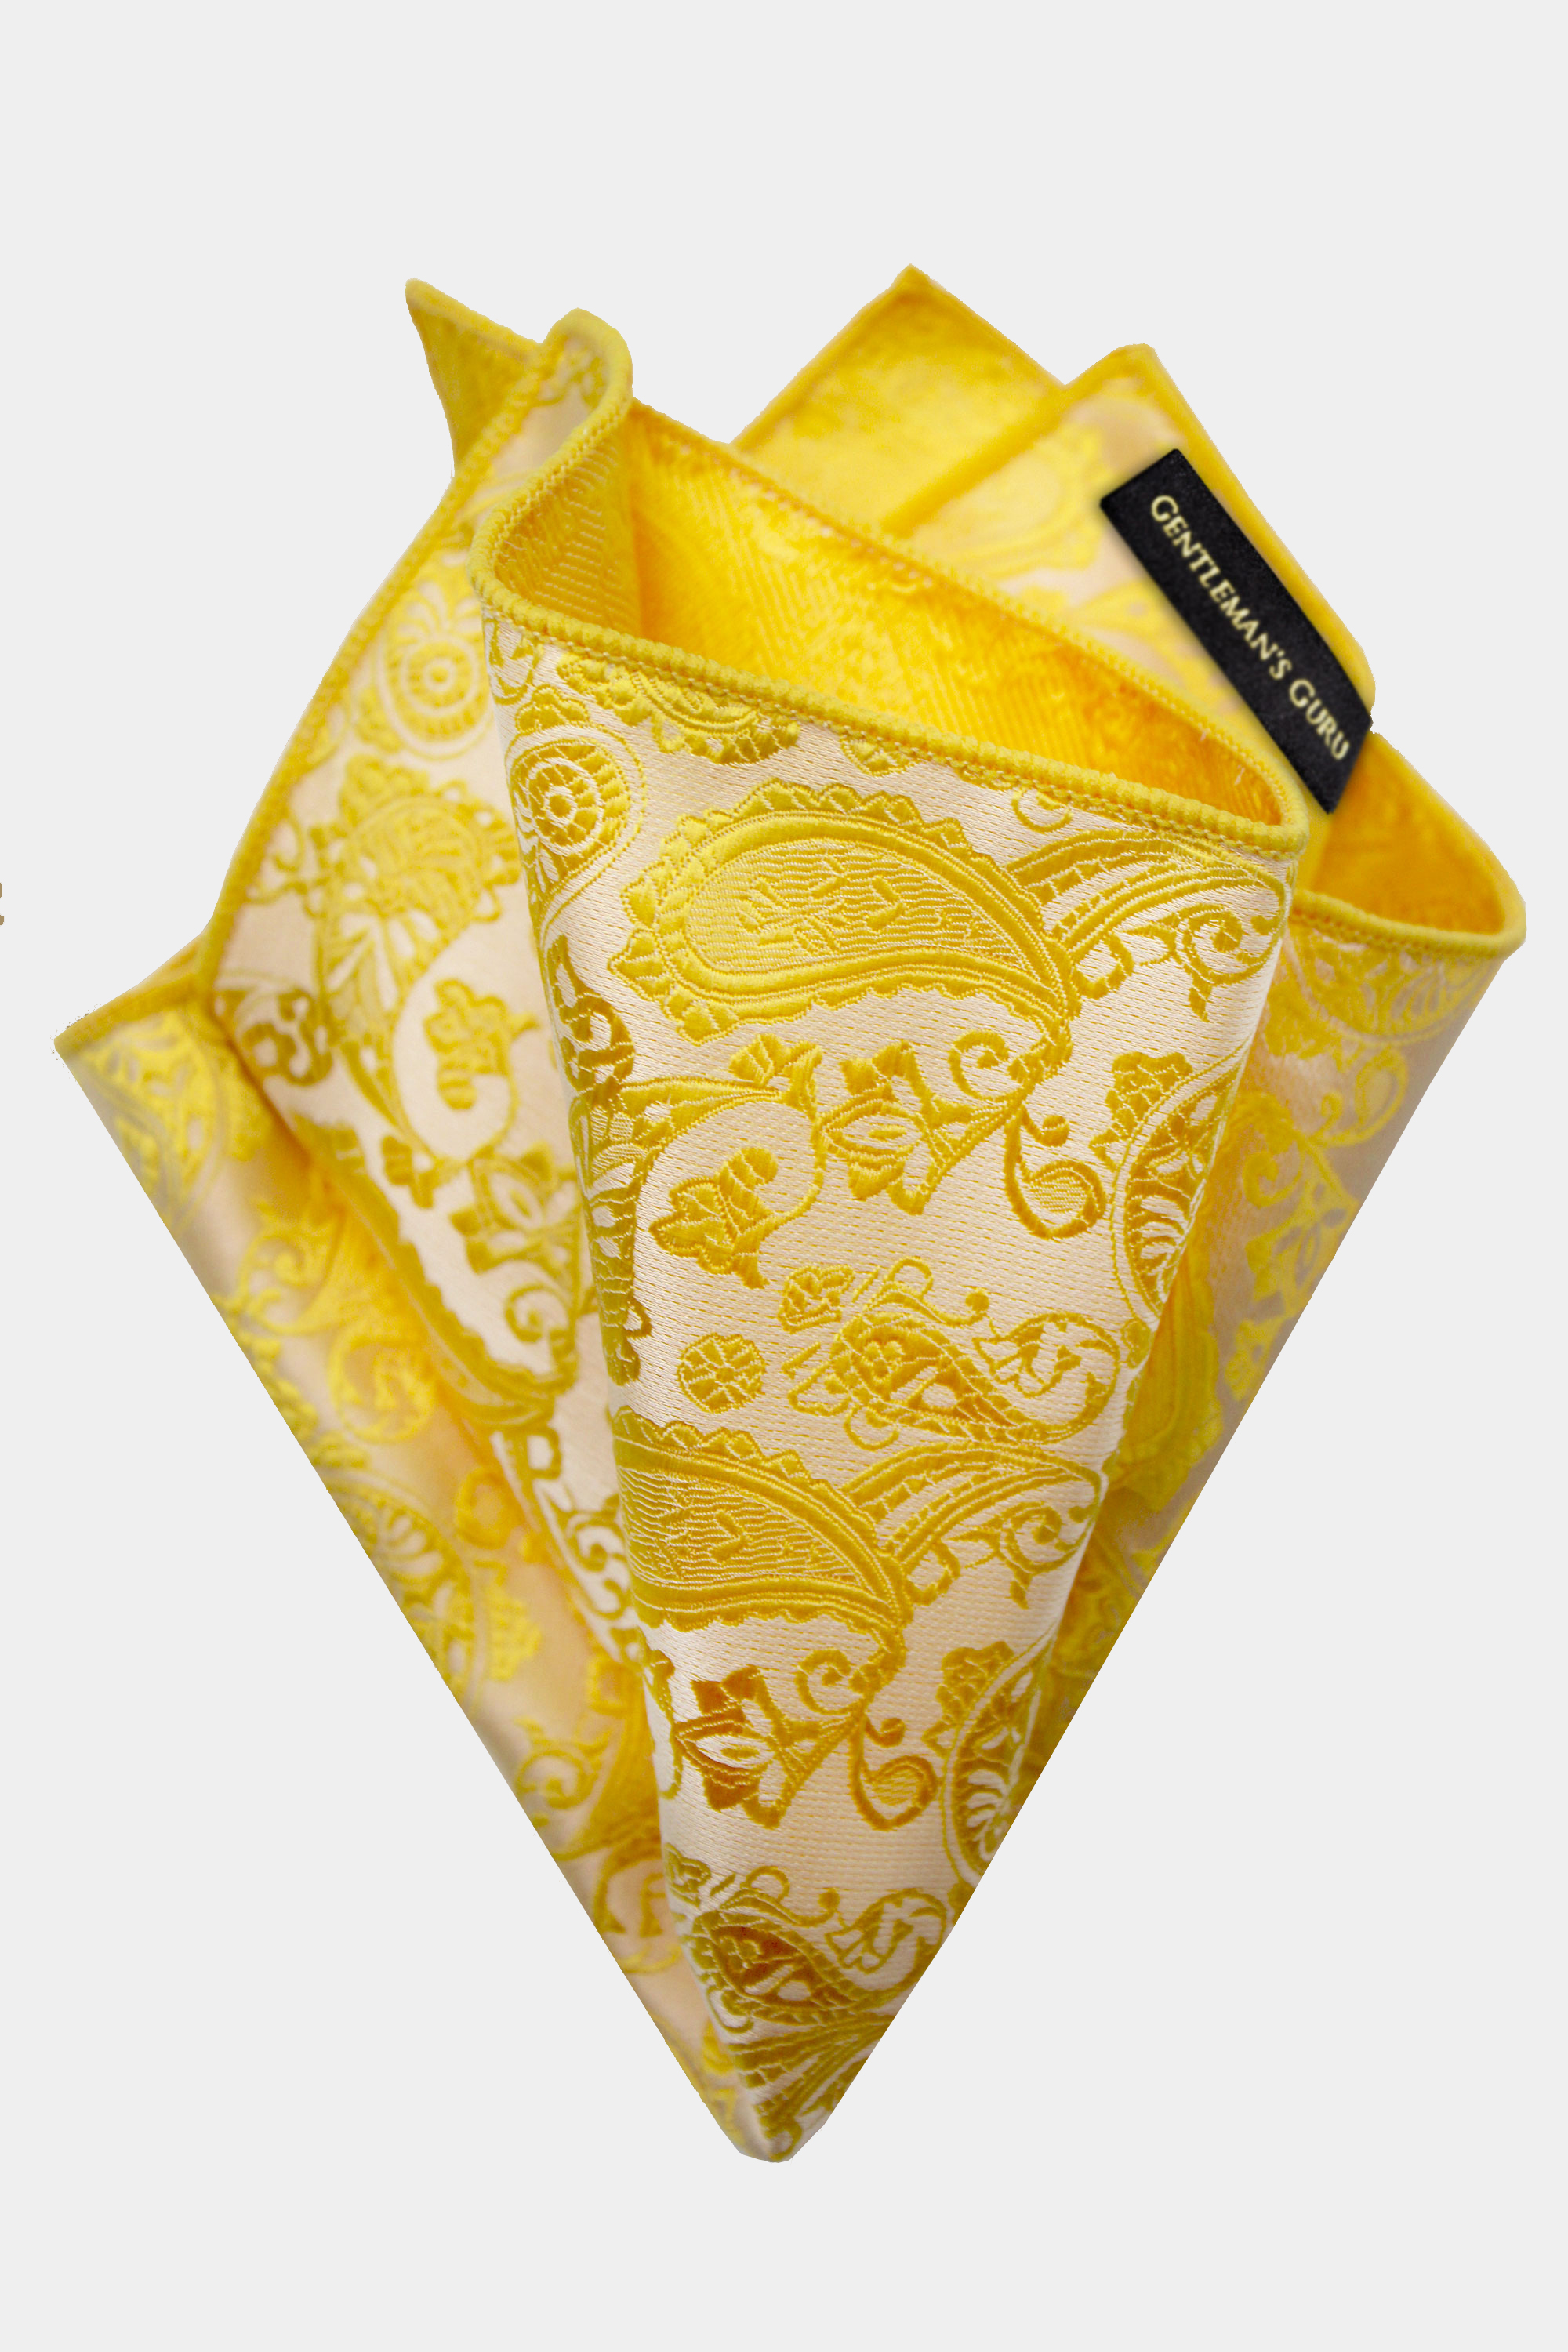 Gold-Paisley-POcket-Squarte-Handkerchief-from-Gentlemansguru.com_